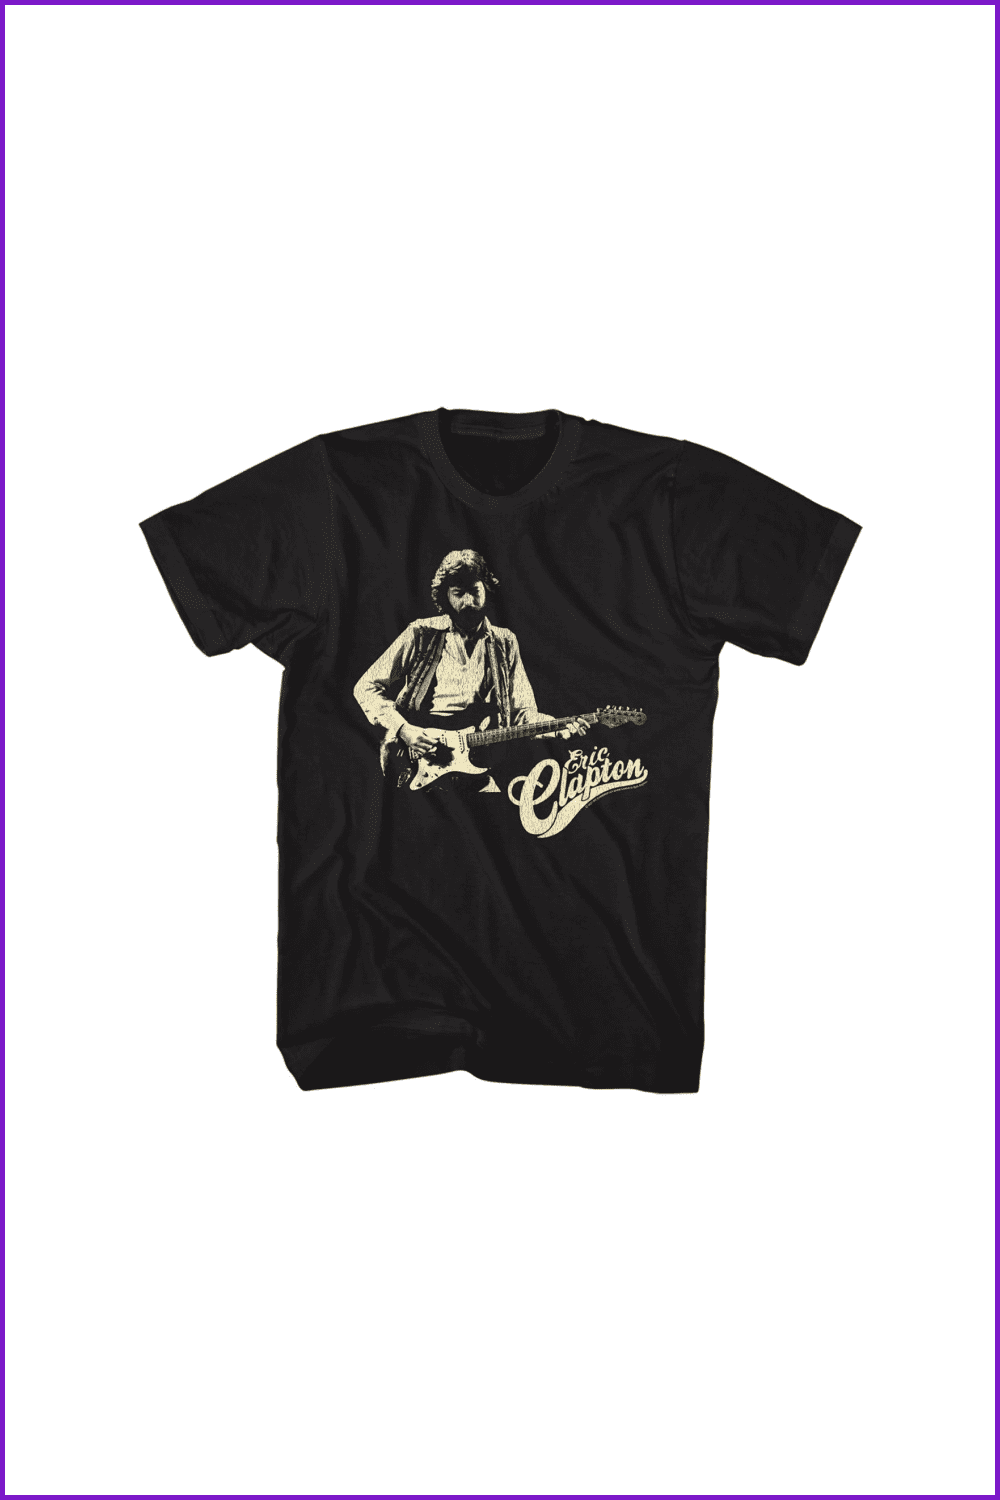 Eric Clapton T-Shirt.